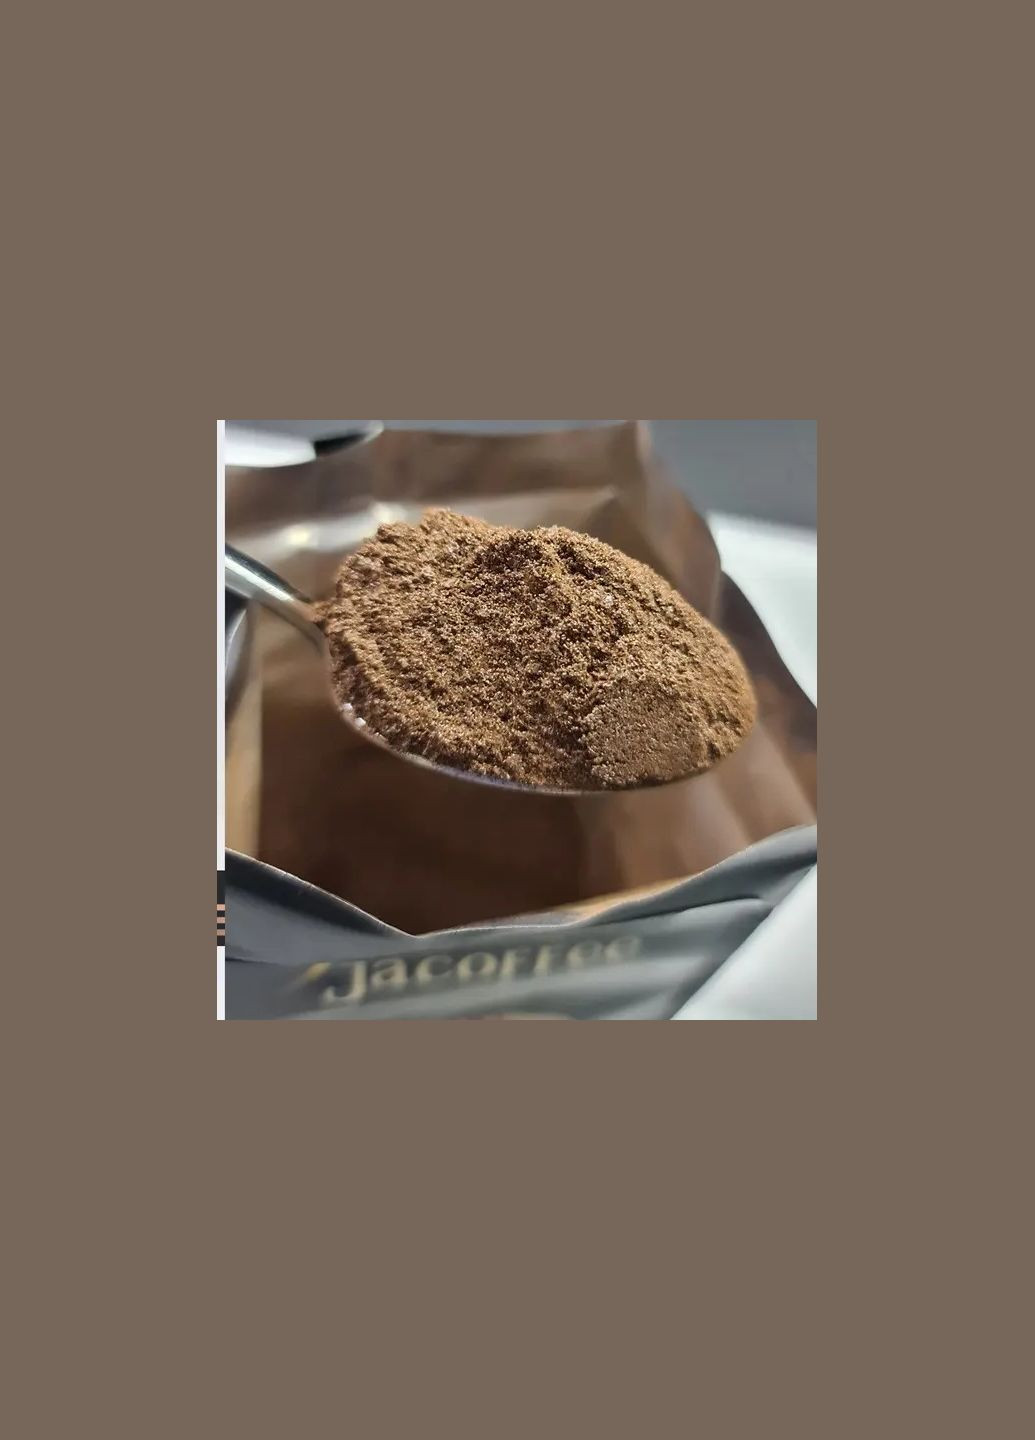 Горячий шоколад, лесной орех, 23%, 2 кг Jacoffee (293151951)